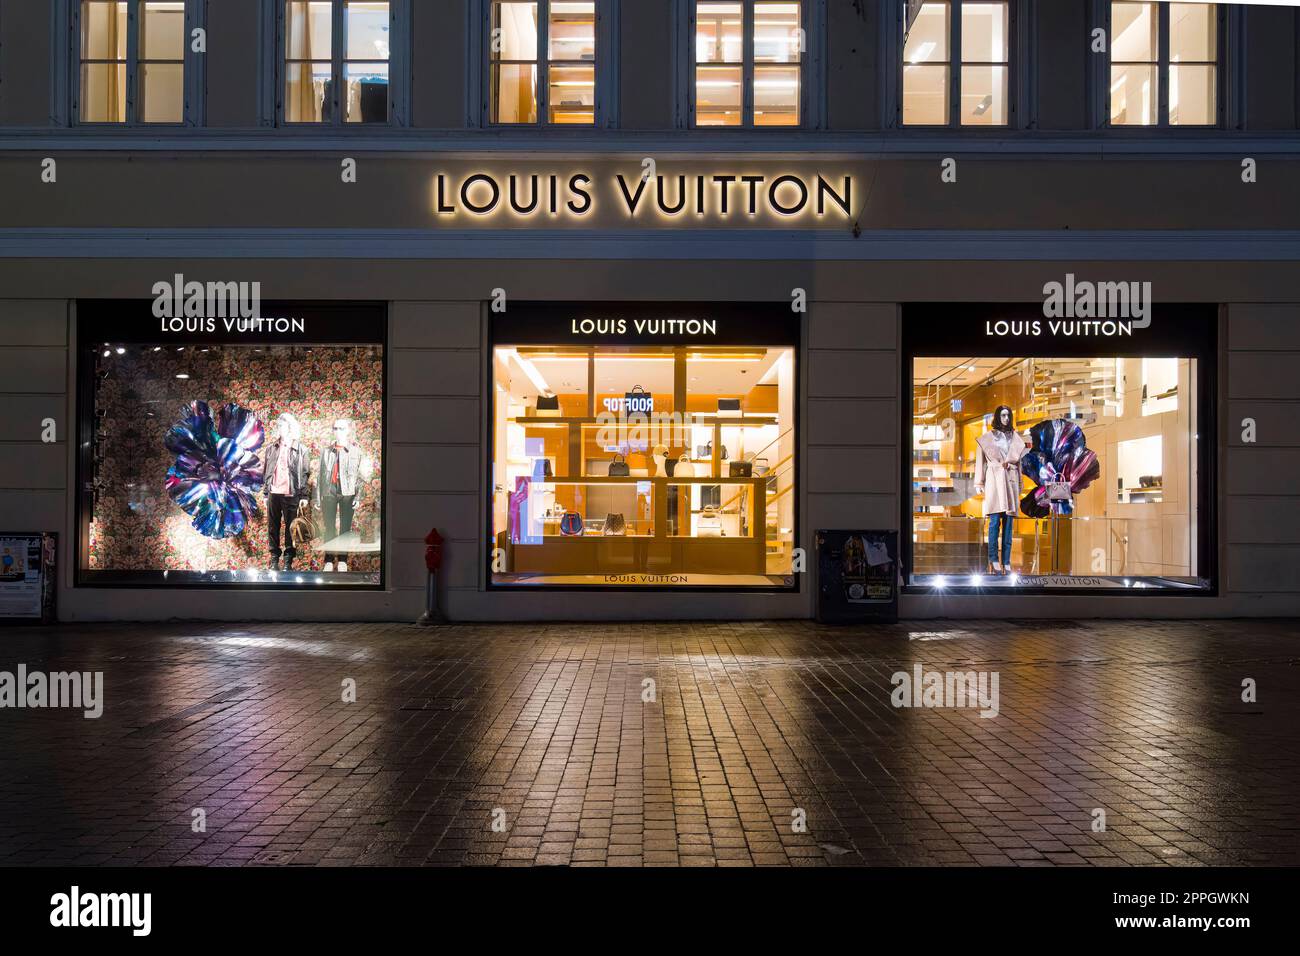 Louis Vuitton flagship store in the street retail – Stock Editorial Photo ©  Krasnevsky #157479772